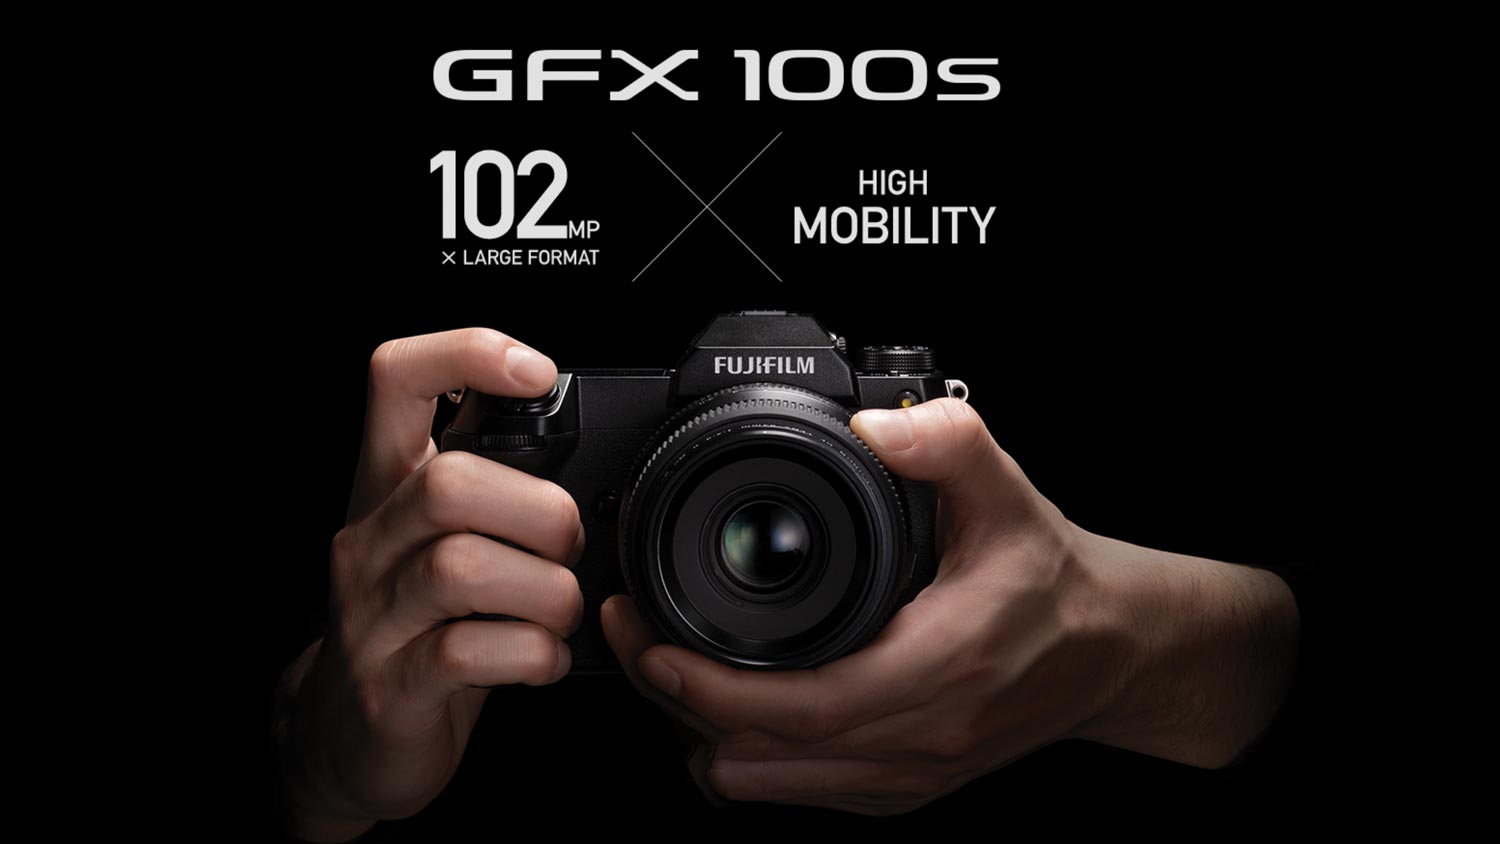 Fujifilm GFX100S Diumumkan – Sensor 102MP Format Sederhana Dan Tubuh Lebih Kecil